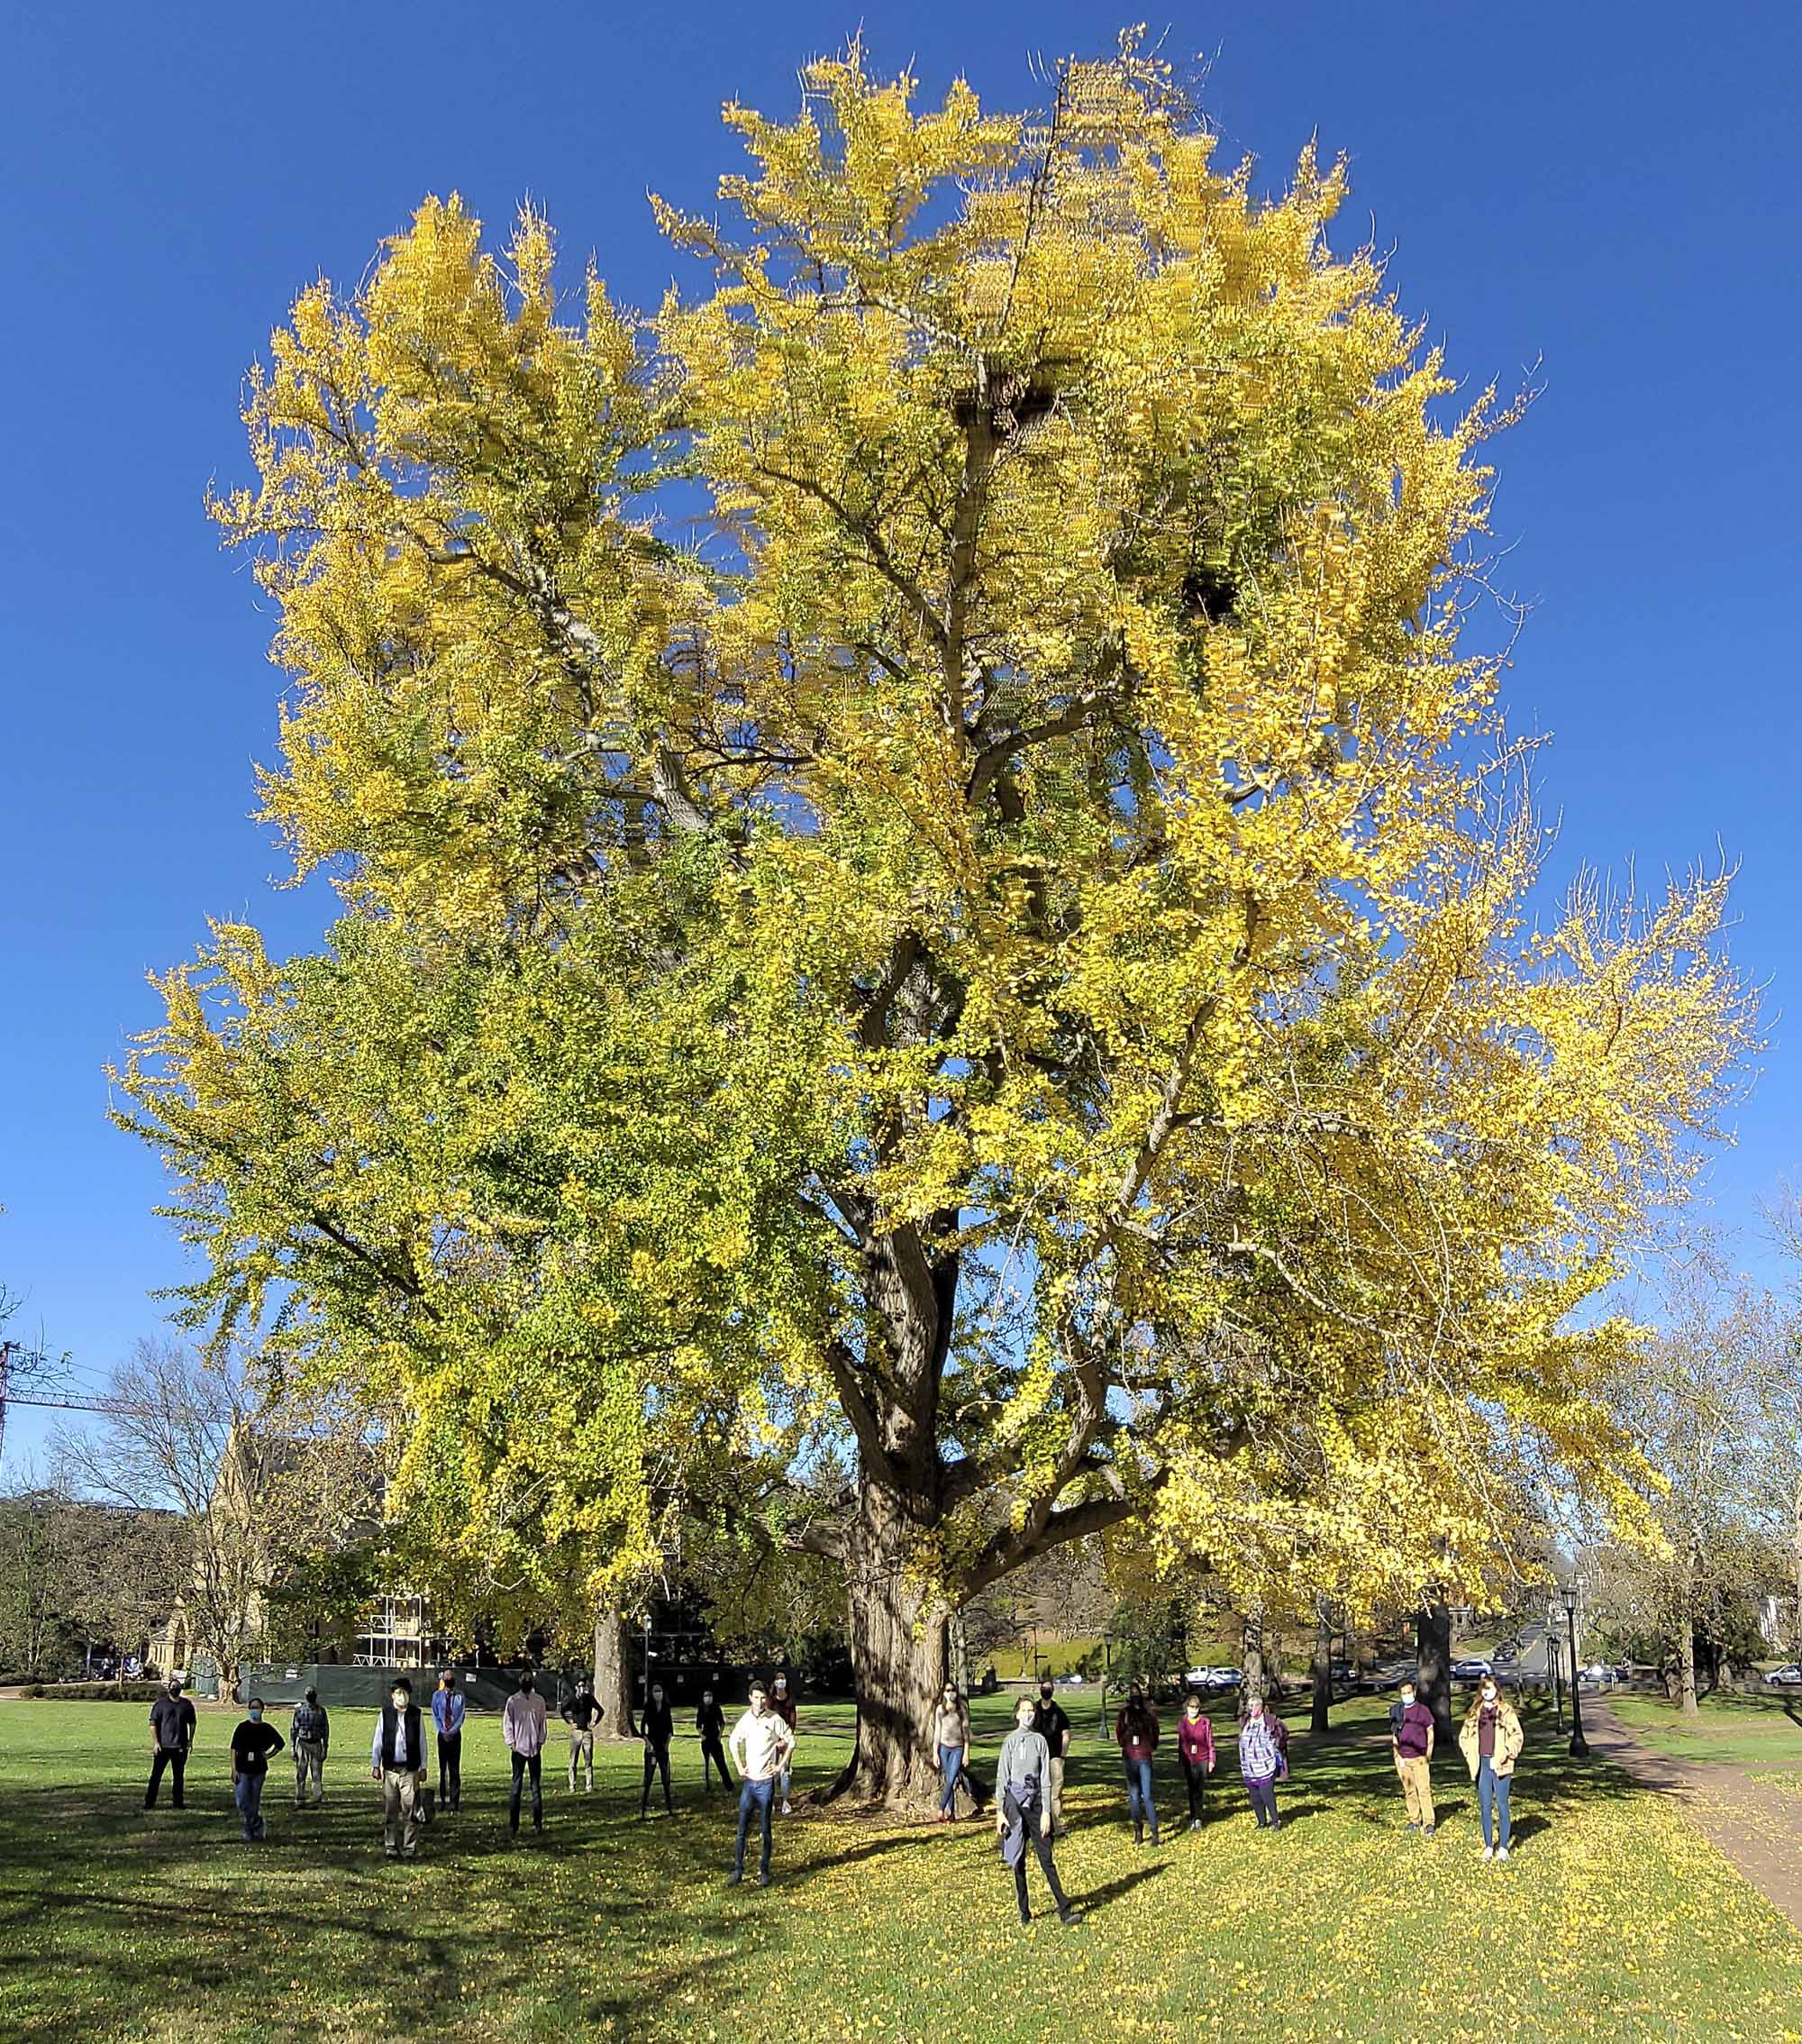 Tree turning yellow